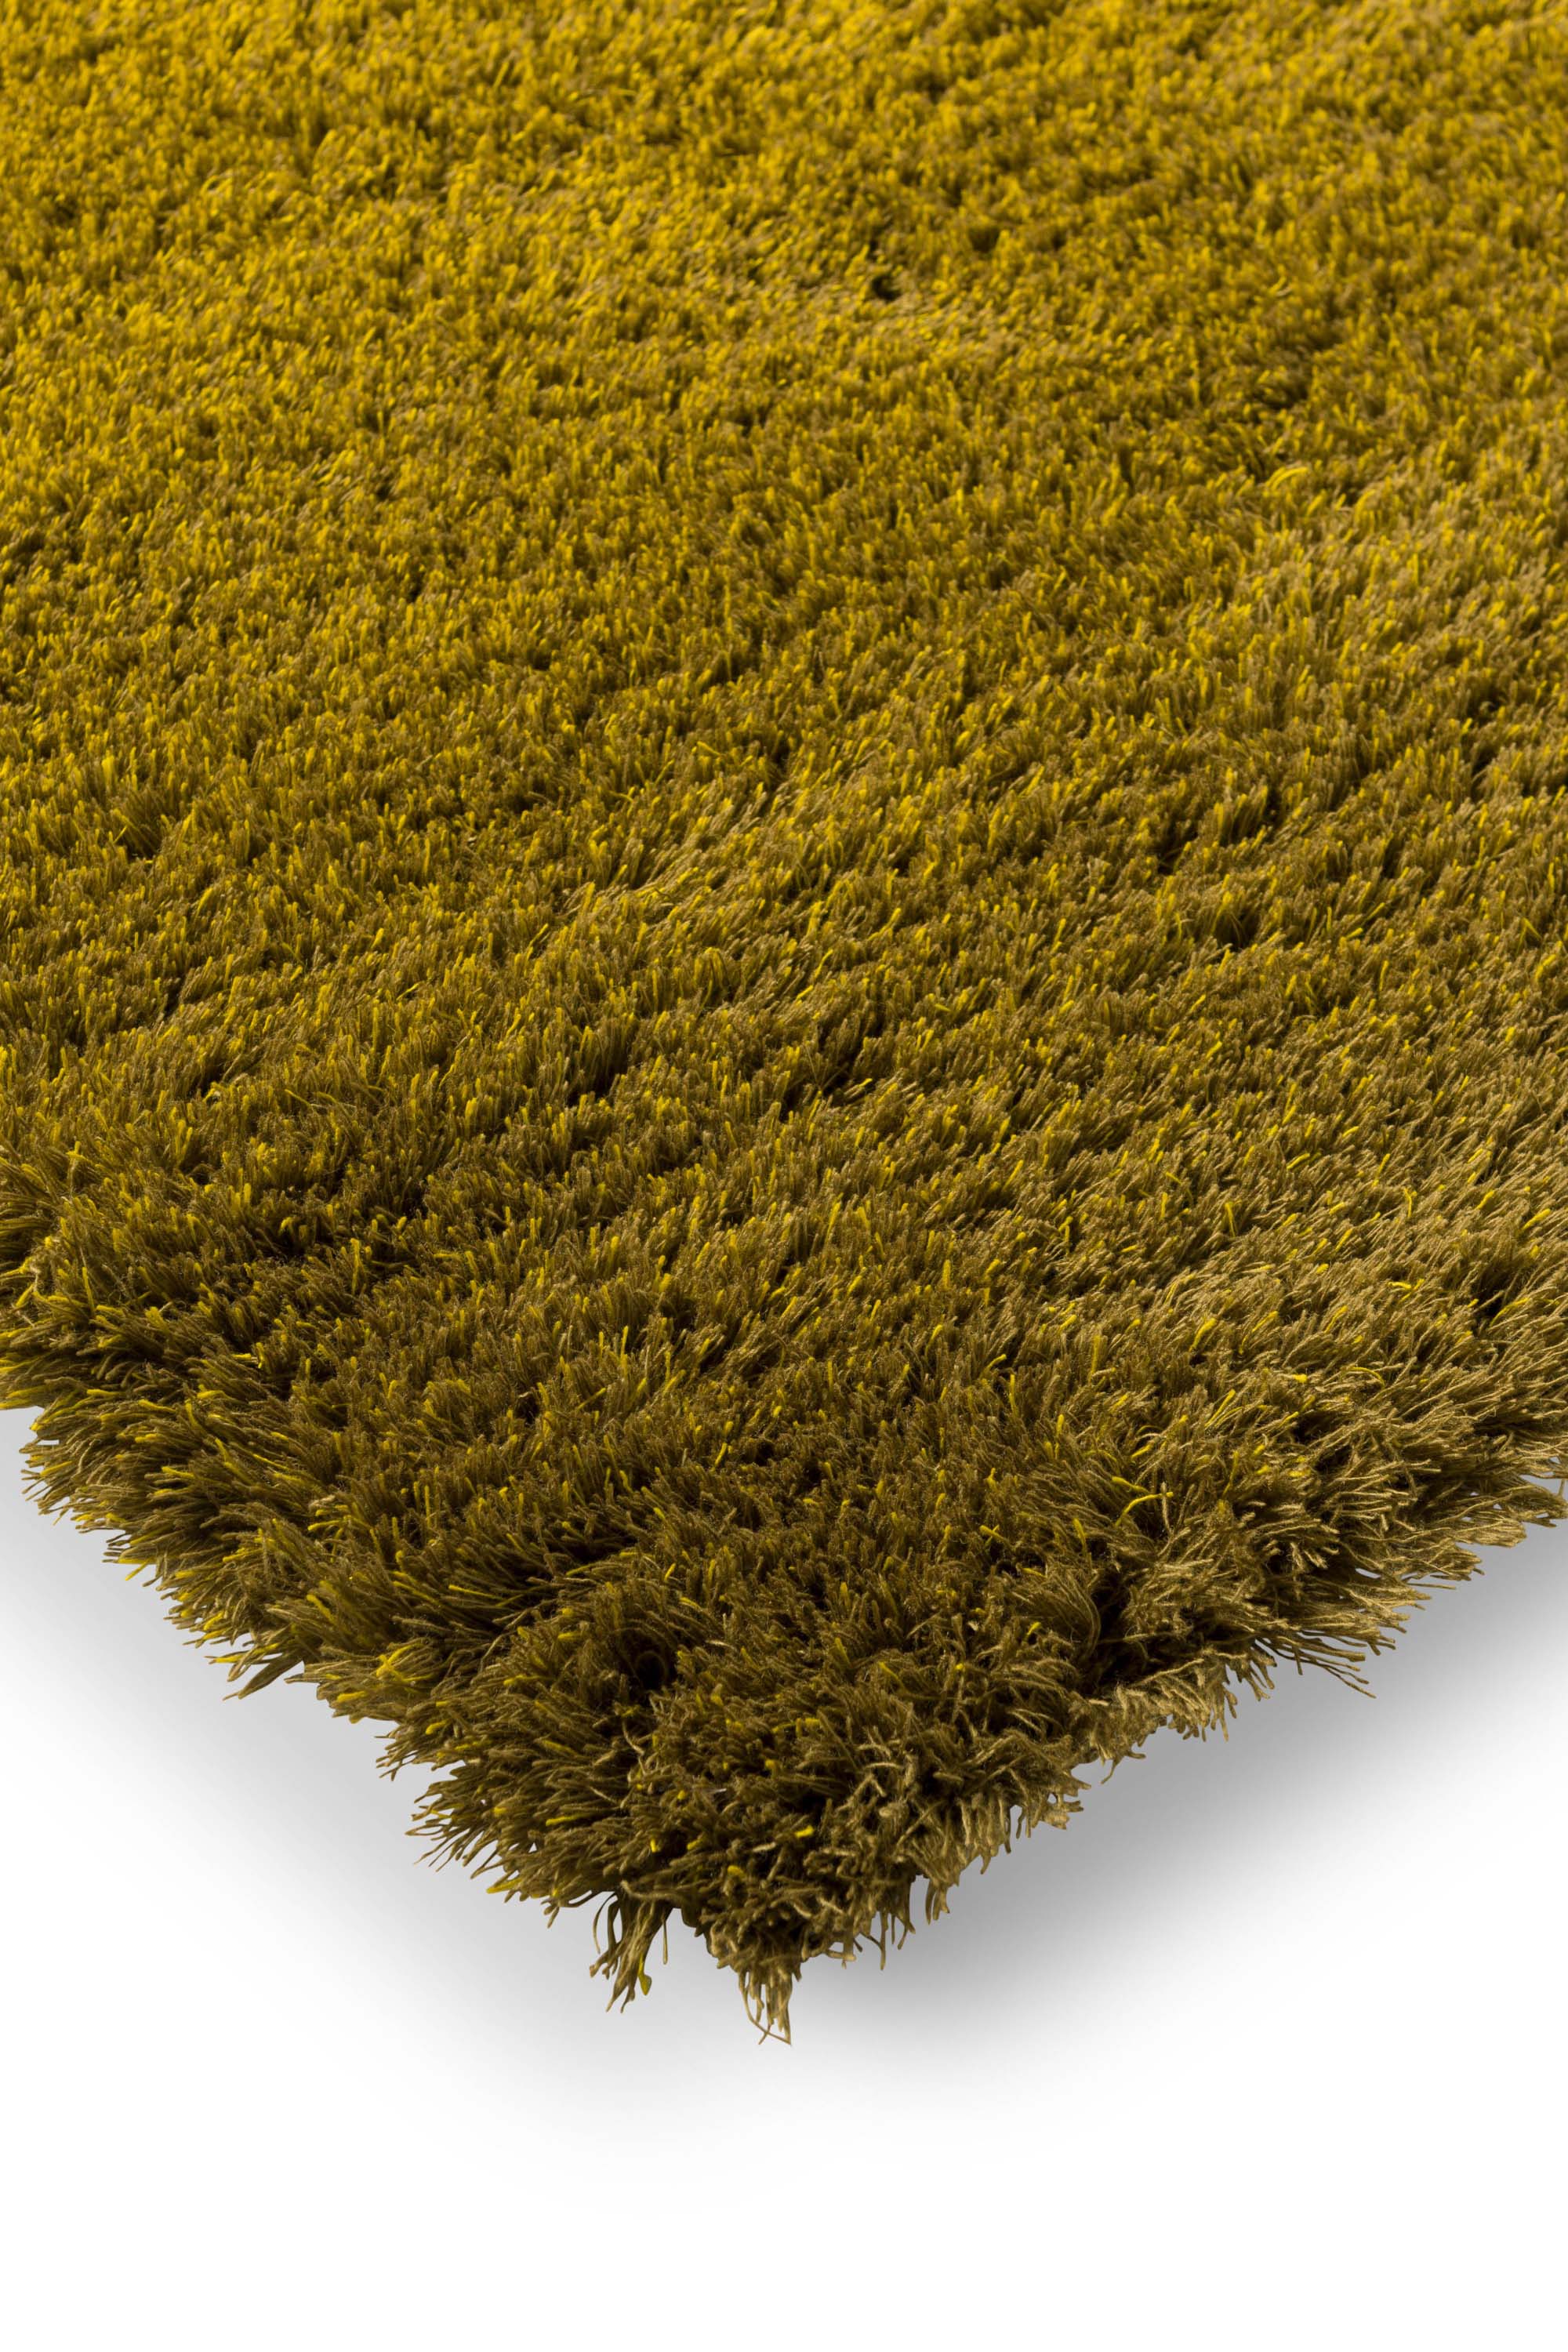 Plain yellow rug with shaggy pile